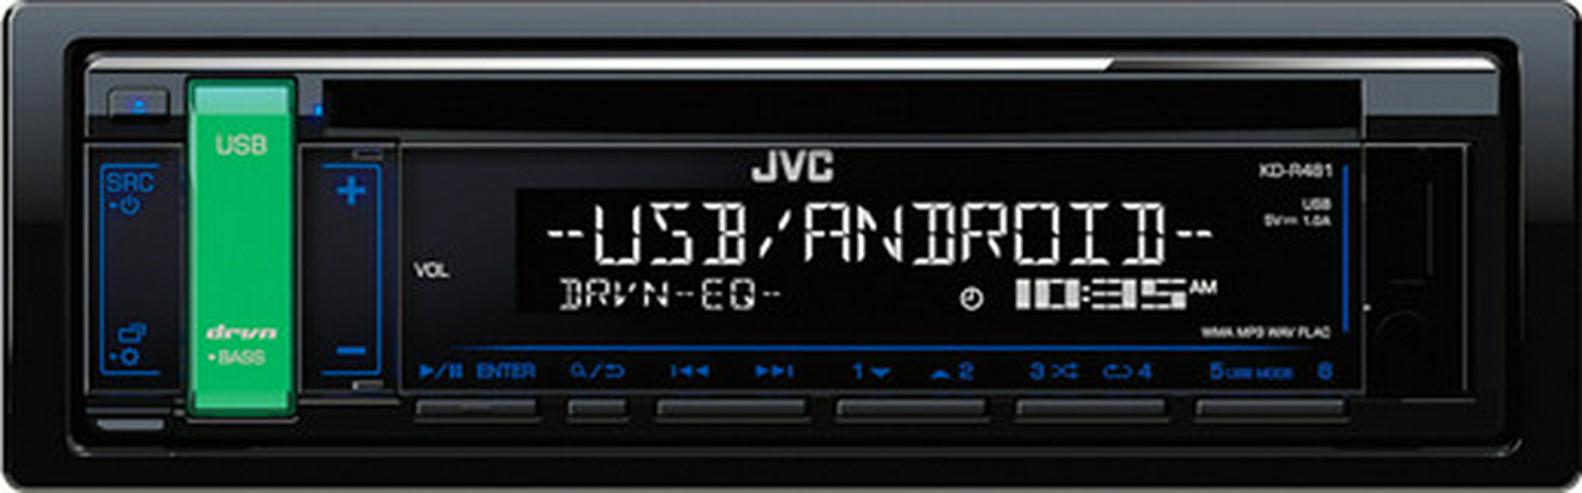 JVC KD-R481 MP3-Tuner USB Autoradio